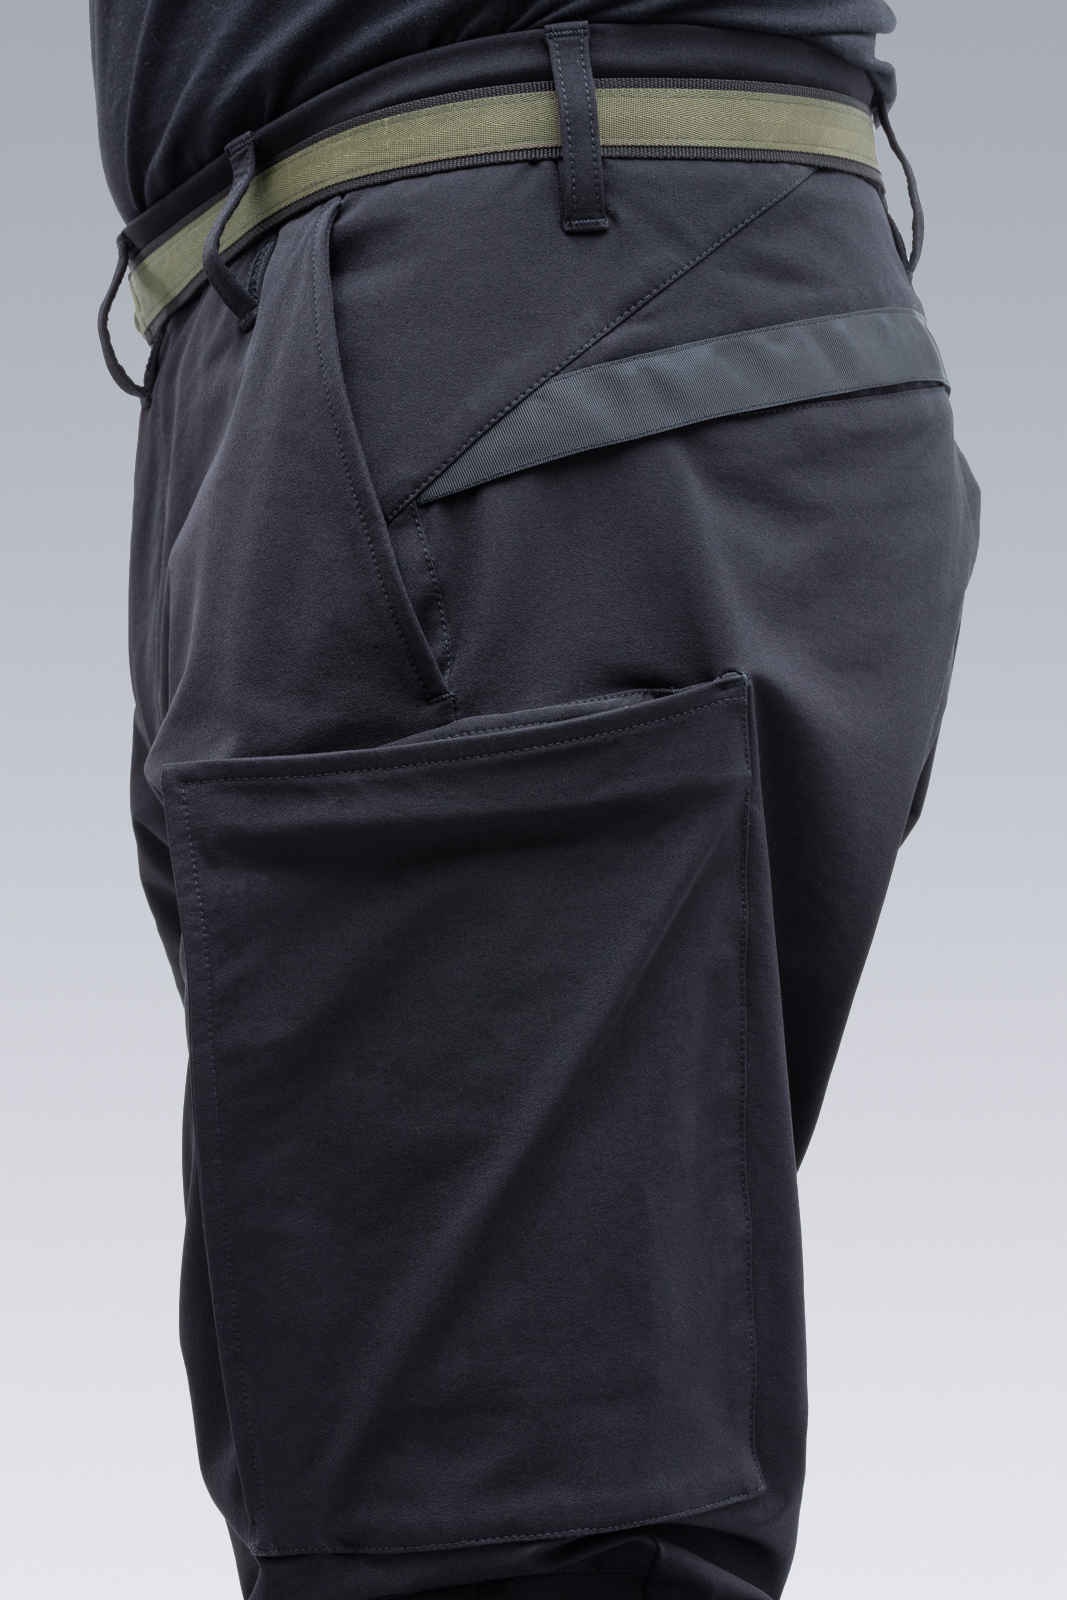 ACRONYM P10A-DS schoeller® Dryskin™ Articulated Cargo Pant Black 